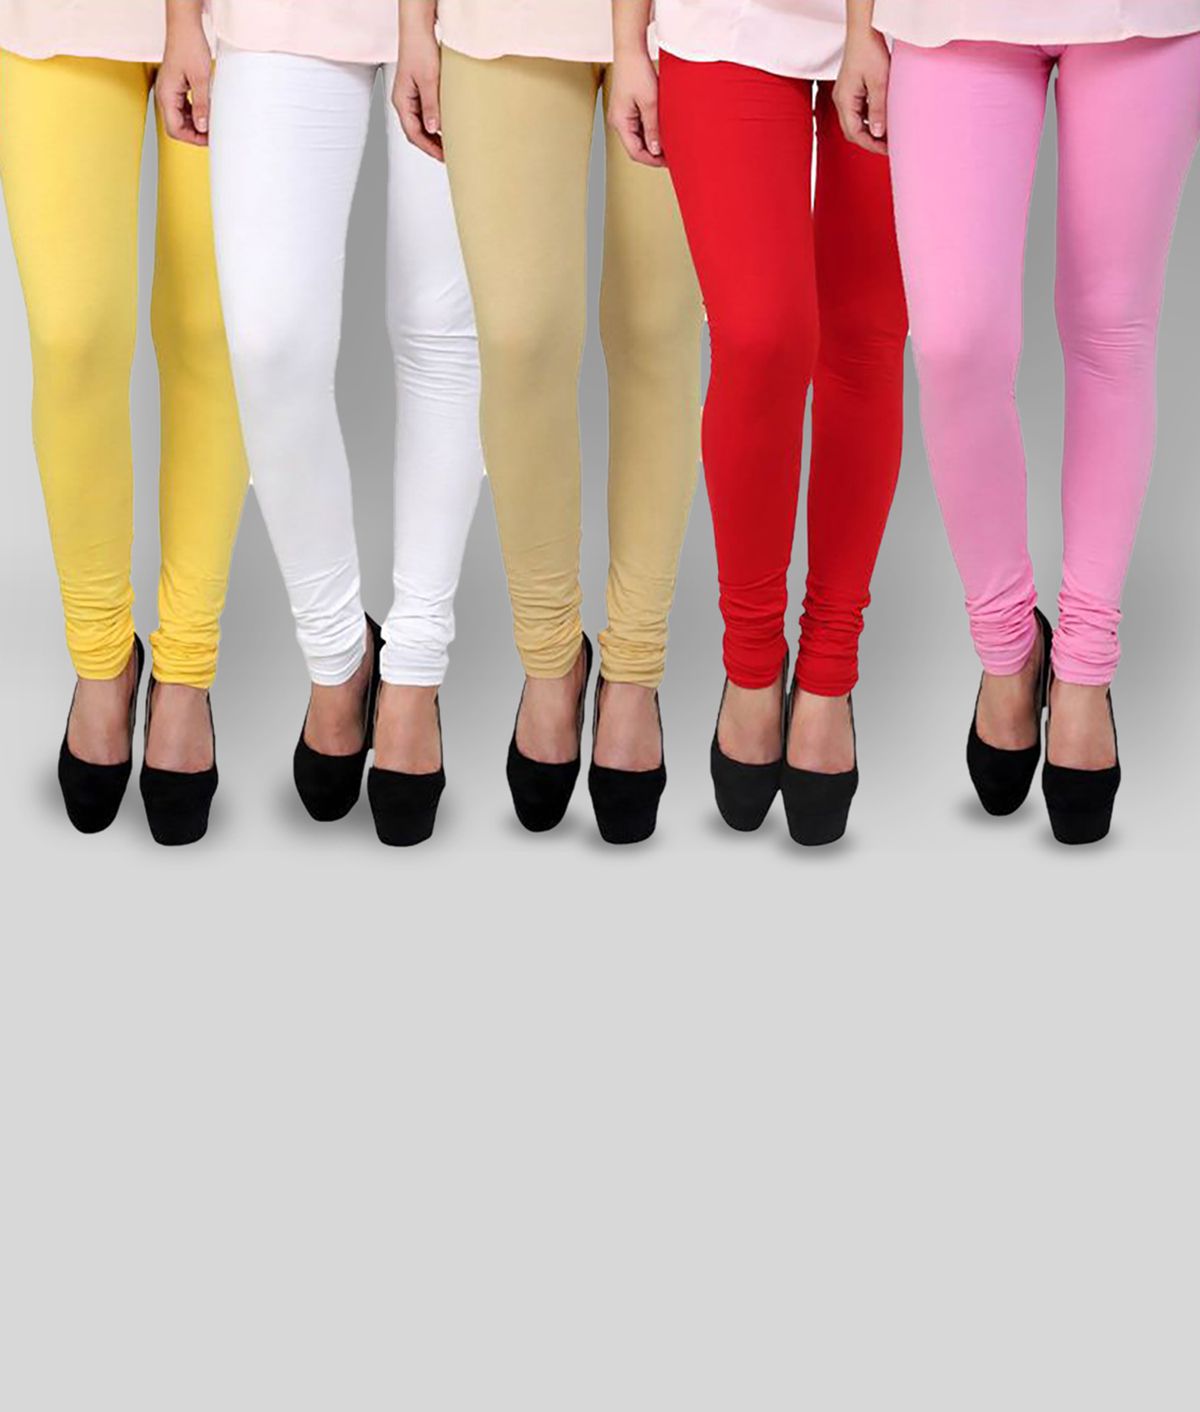     			FnMe - Multicolor Cotton Blend Women's Leggings ( Pack of 5 )